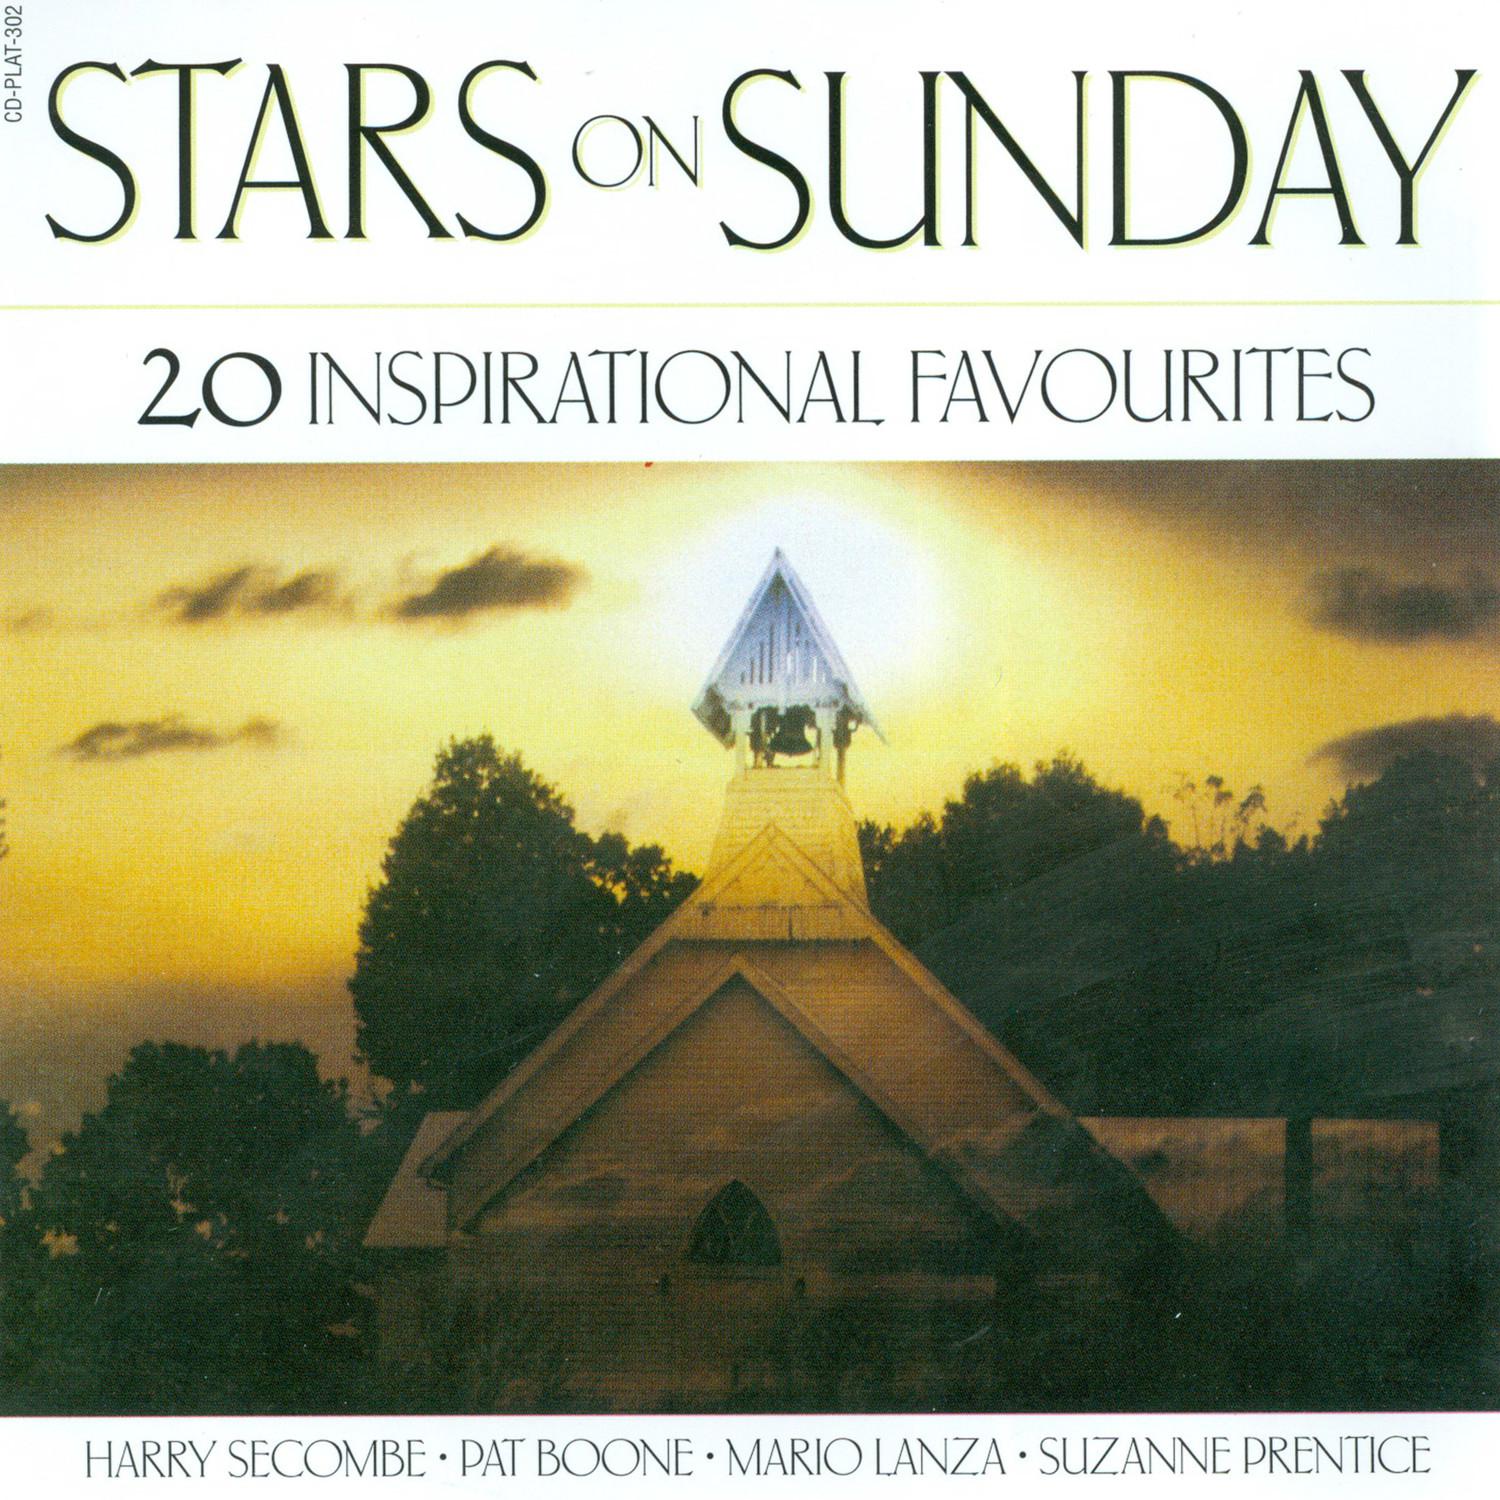 Stars on Sunday - 20 Inspirational Favourites